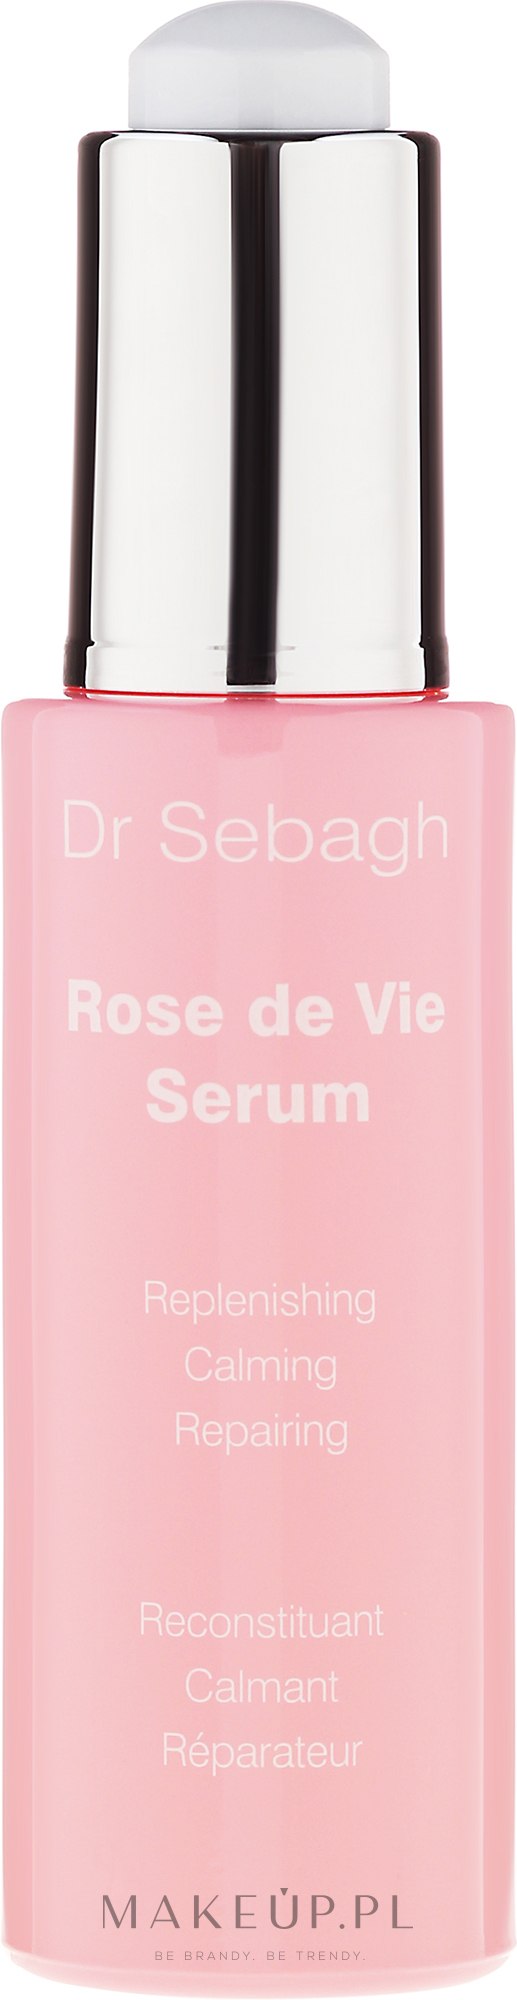 Delikatne serum różane do twarzy - Dr Sebagh Rose de Vie Serum — Zdjęcie 30 ml